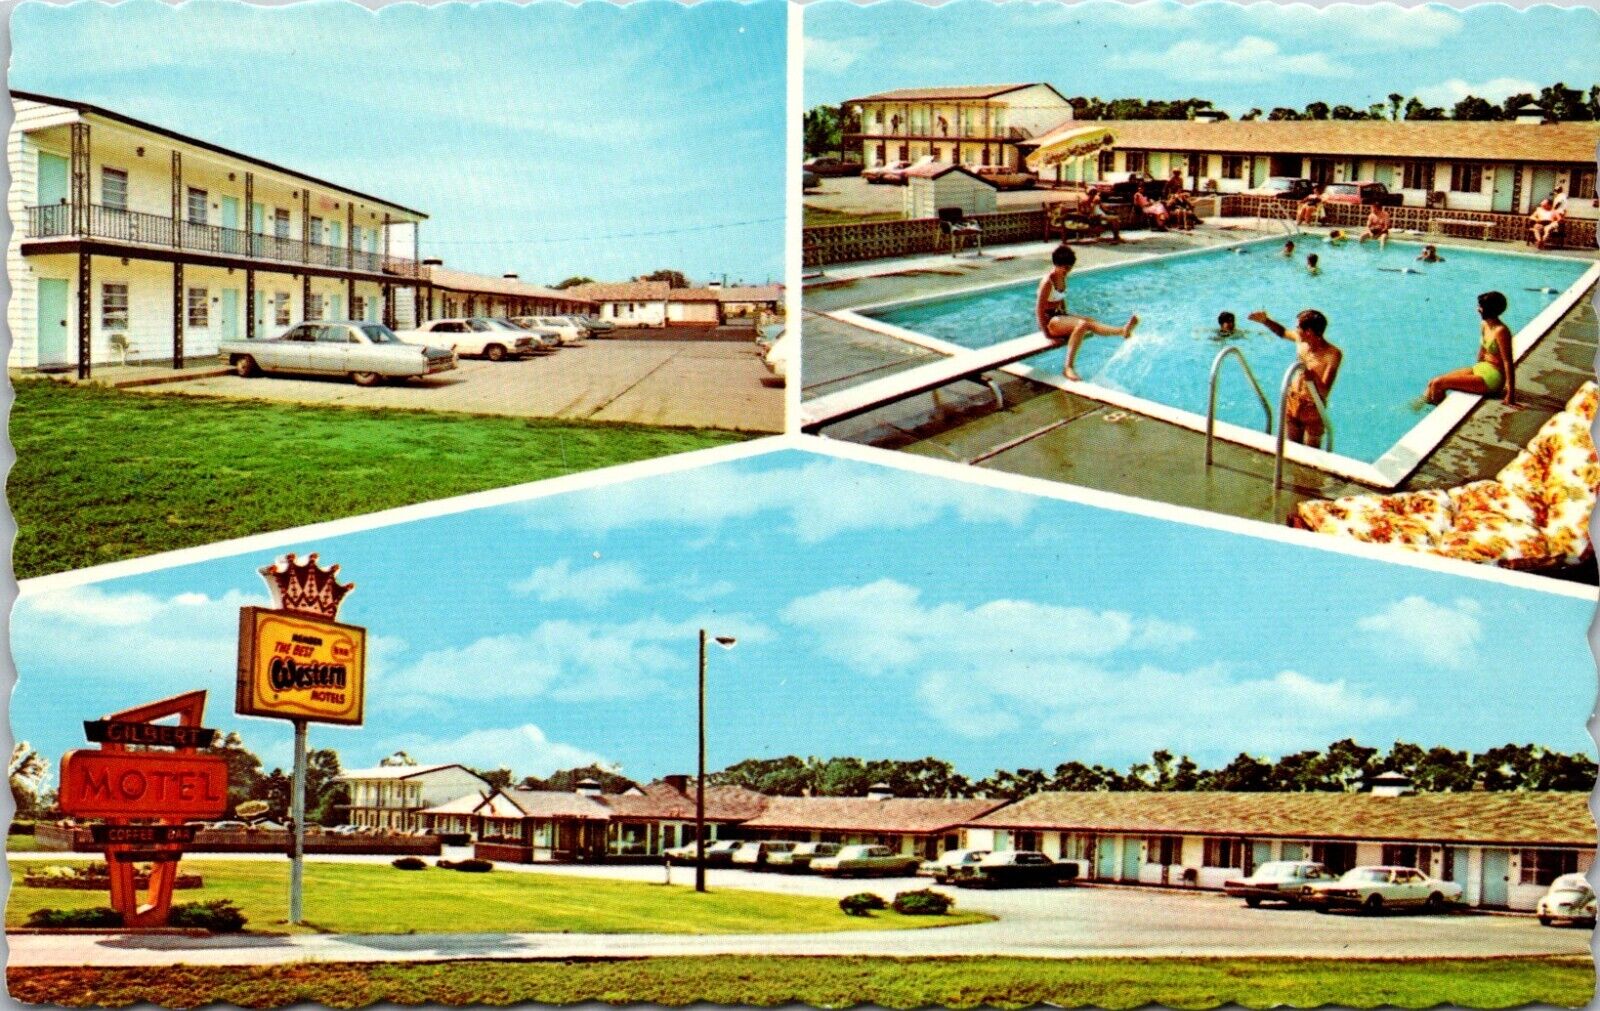 Gilbert Motel Des Moines Iowa Postcard